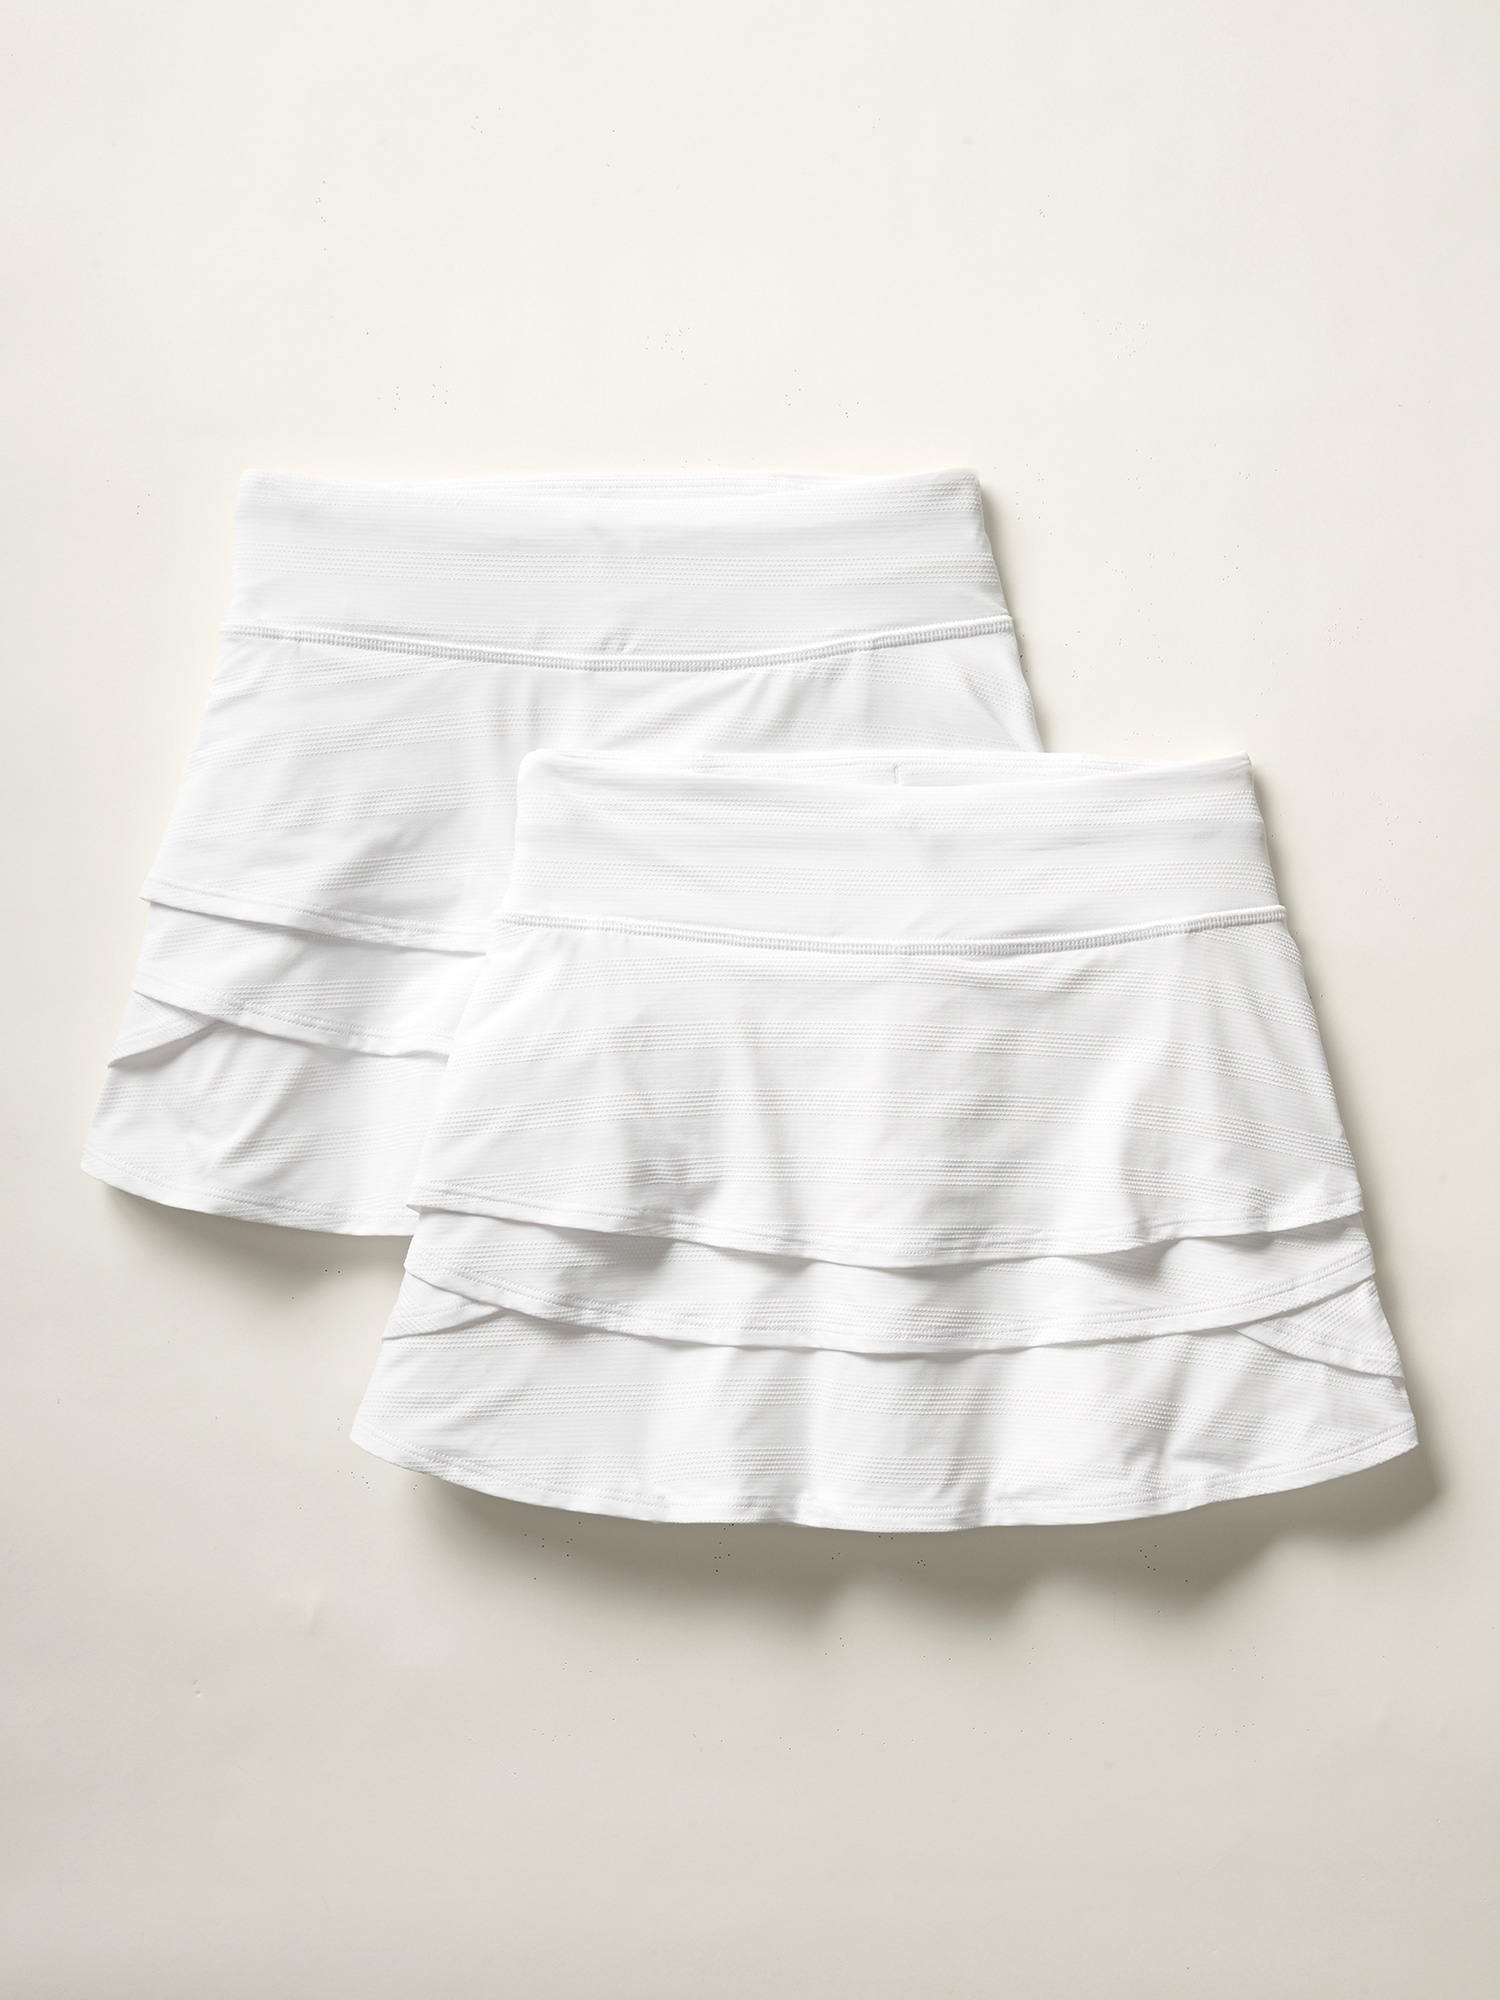 ATHLETA A-Game 2 in 1 Crop XL White, Stash Pocket Leggings w/ Tennis Skirt  NWT